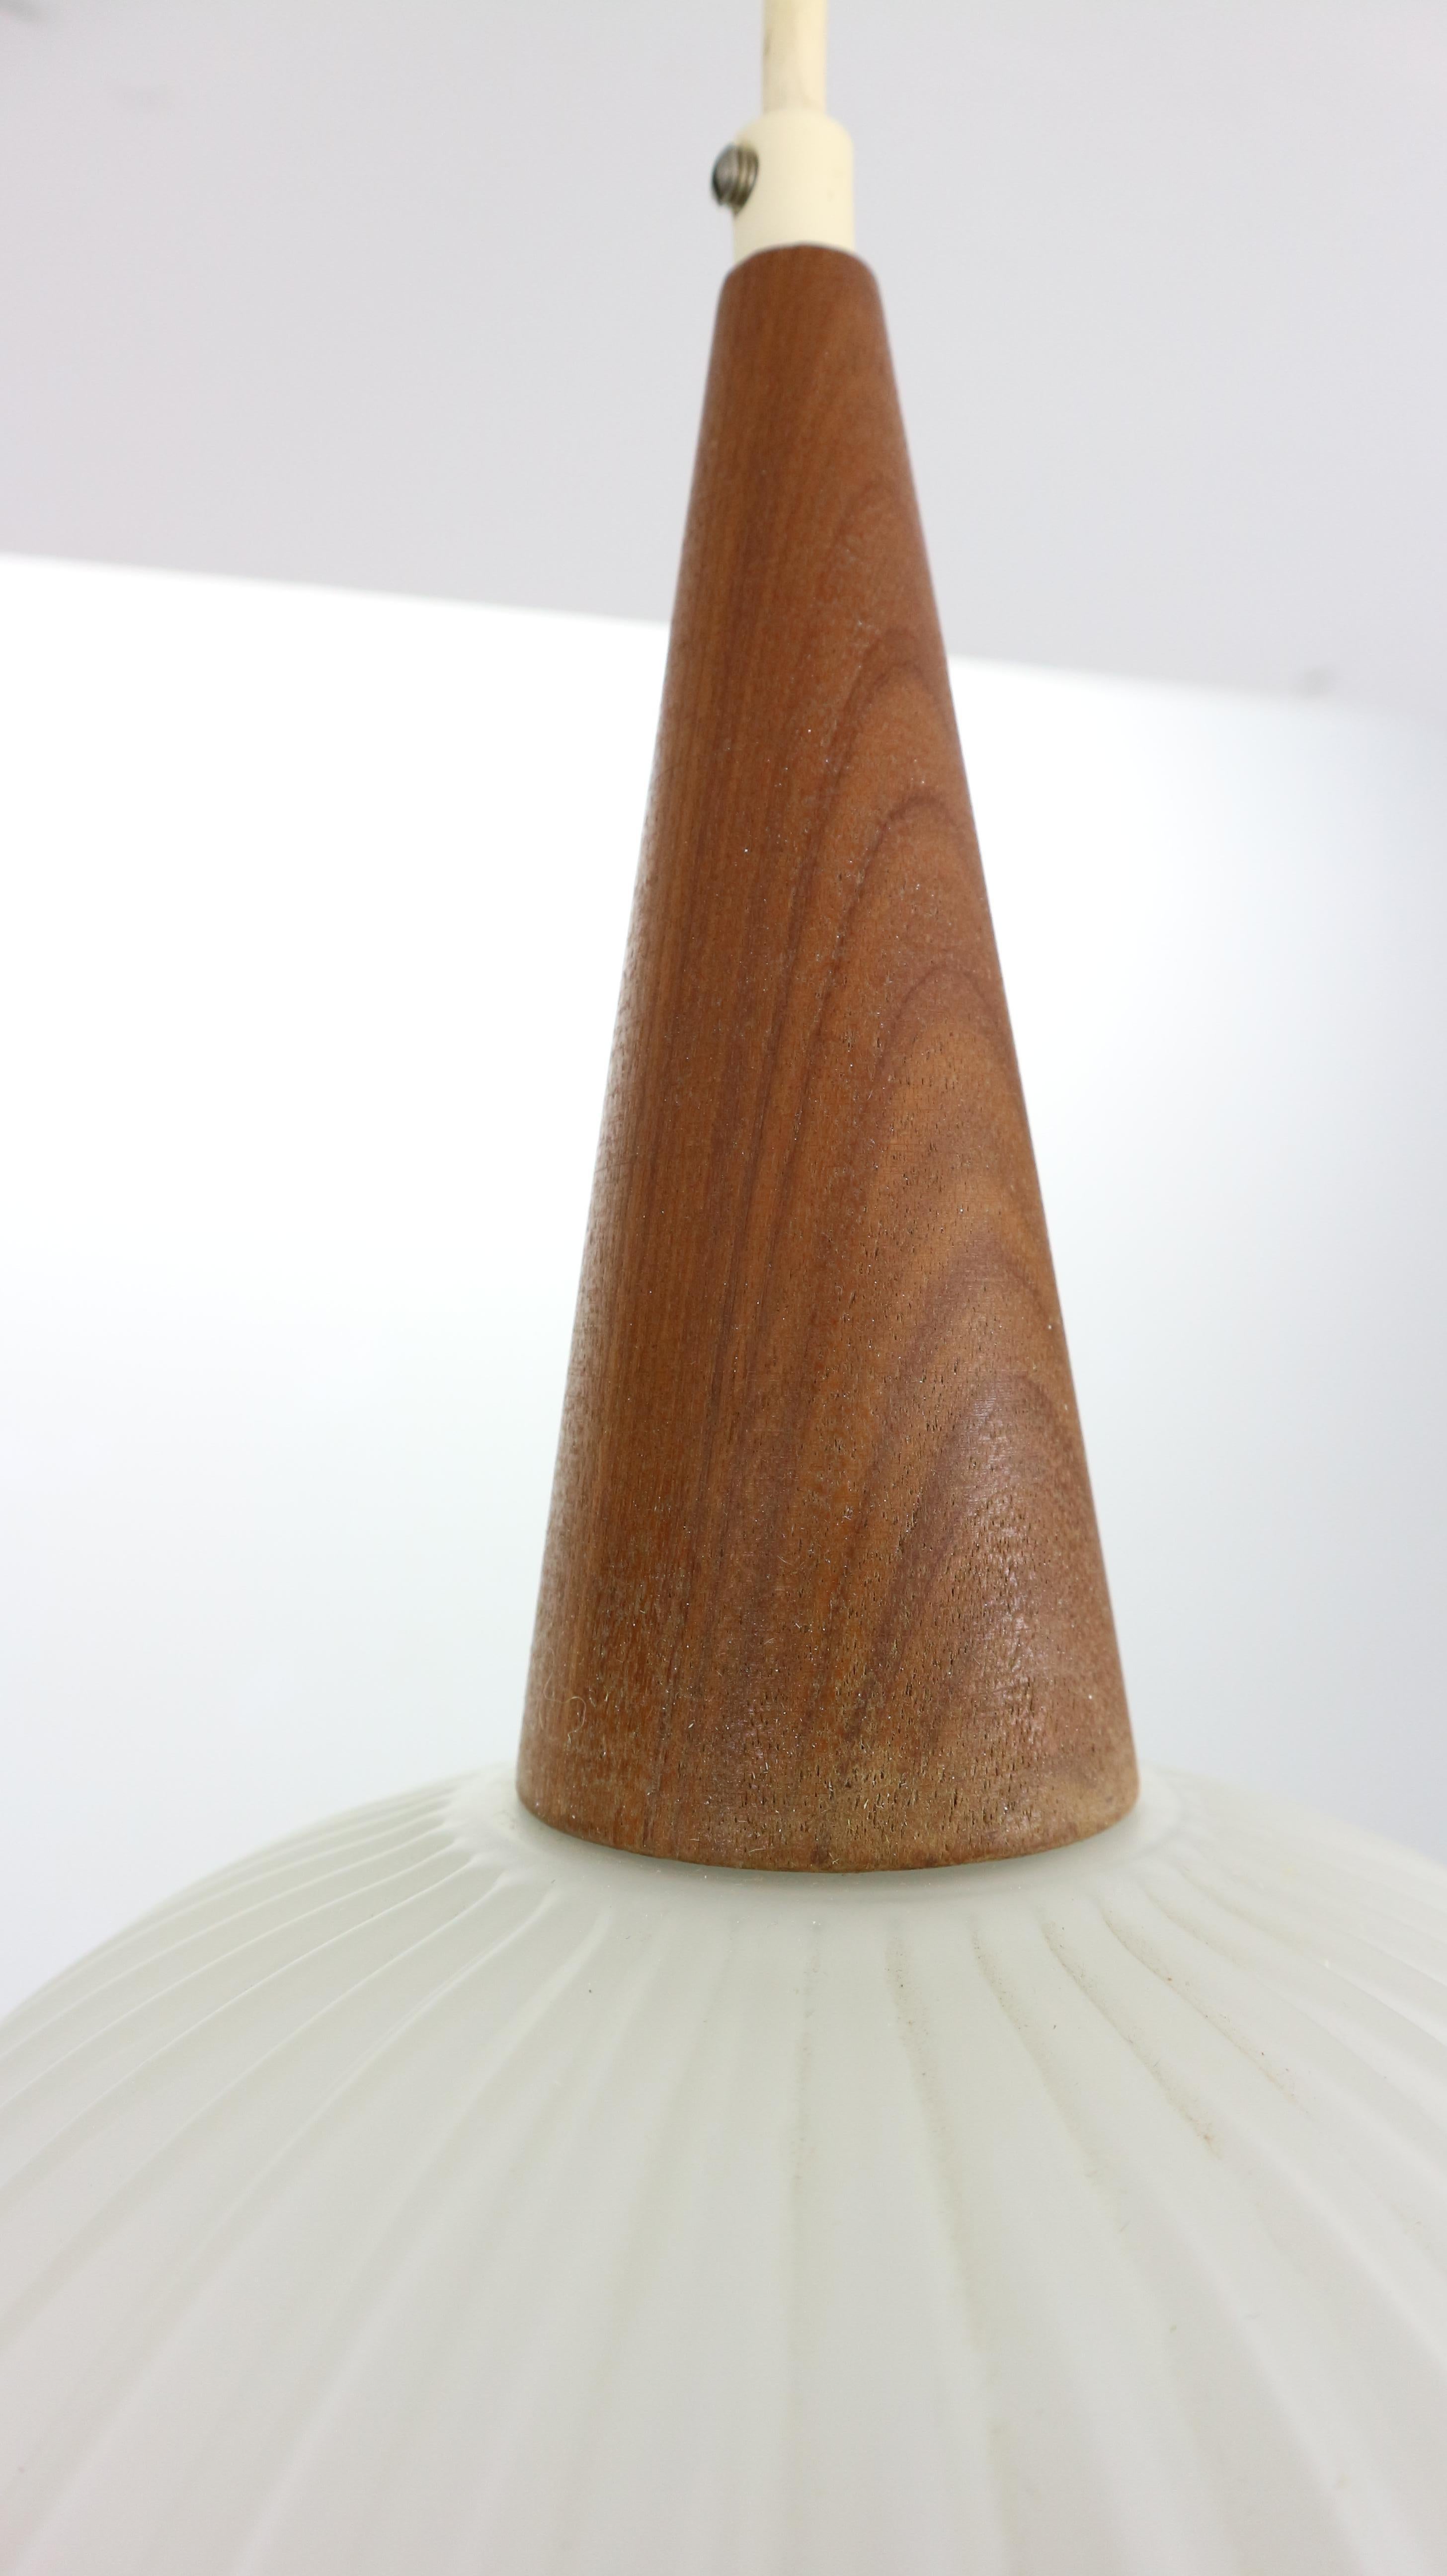 Mid-20th Century Milk Glass & Teak Wood Pendant Lamp, Louis Kalff for Philips, 1960s Netherlands